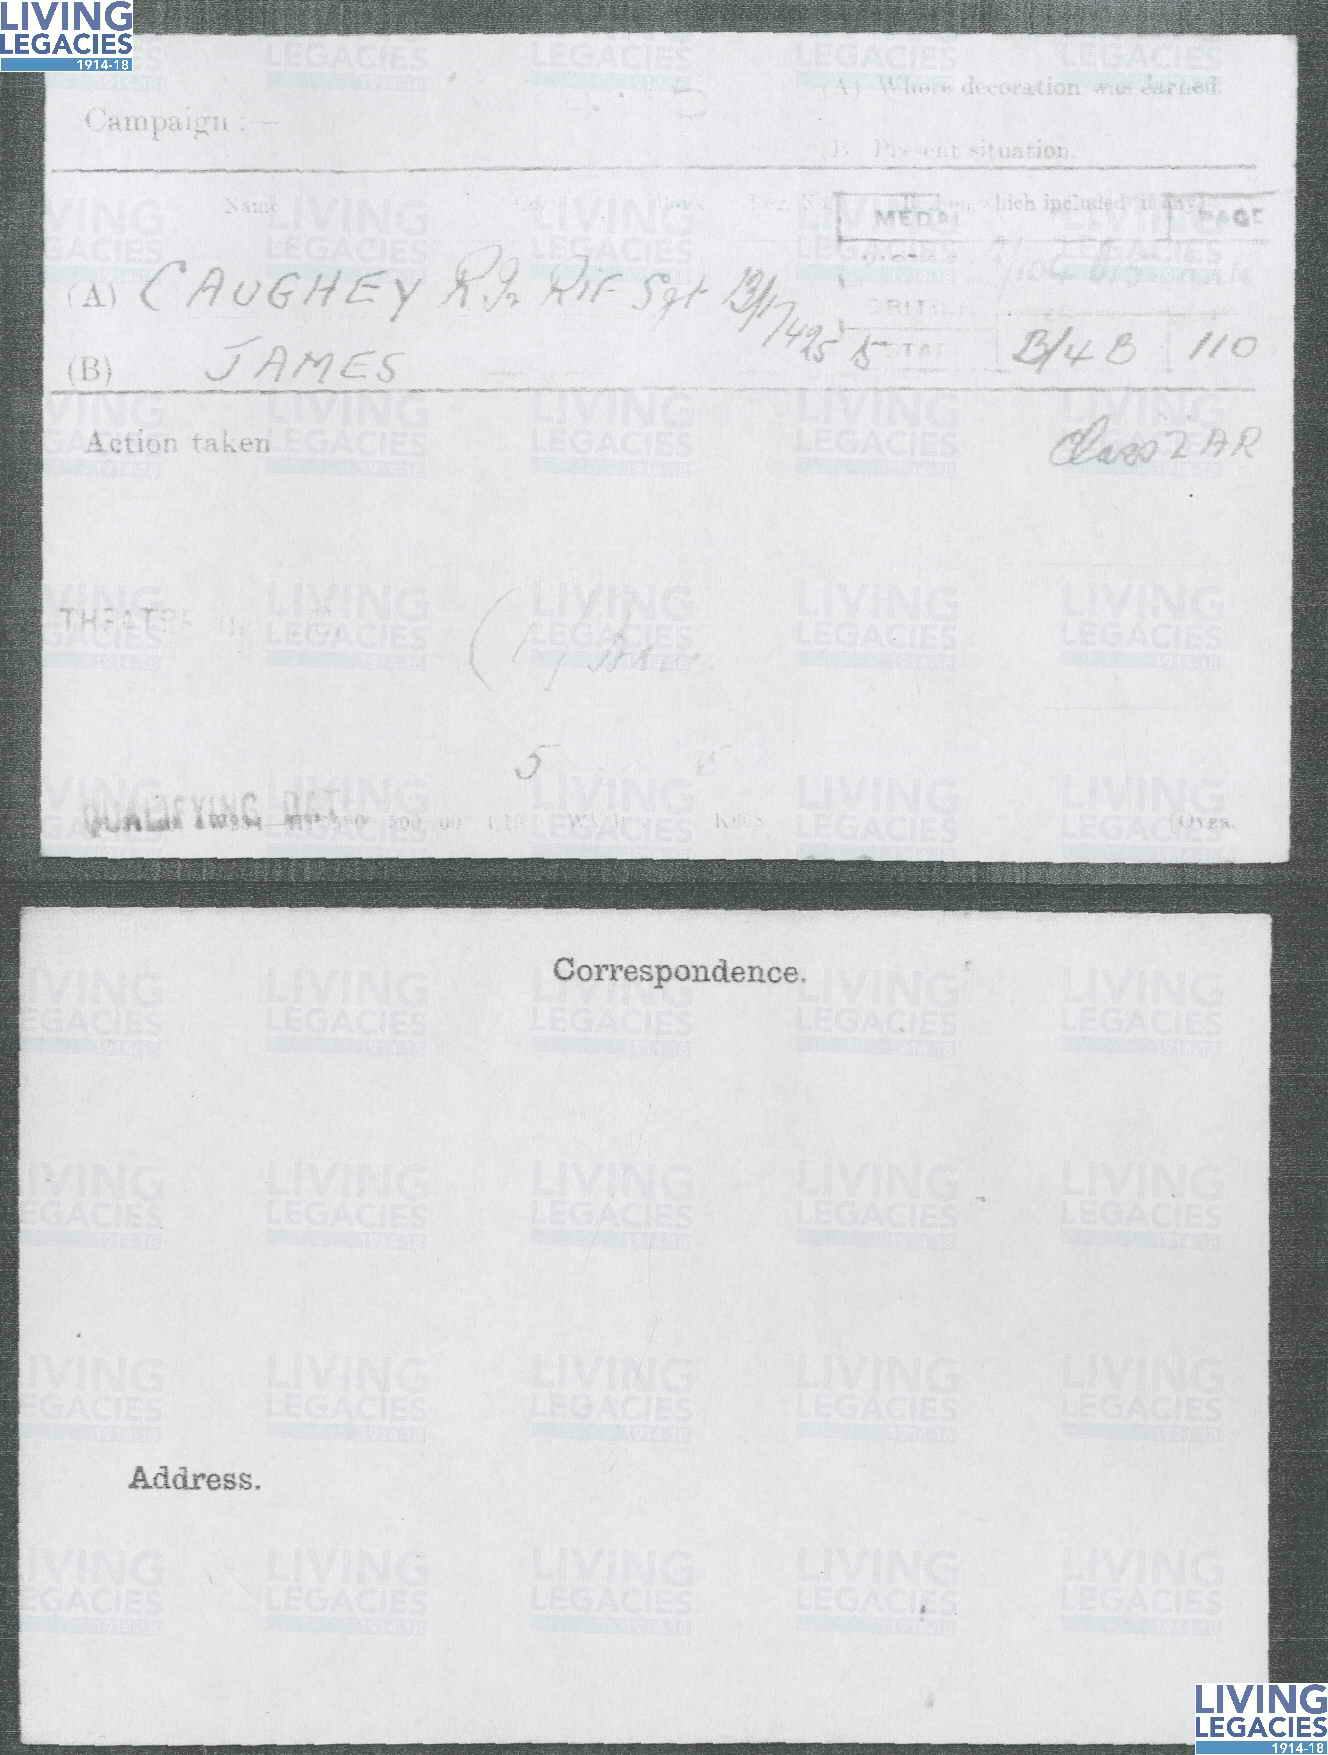 ID1896 - Artefact Relating to James Caughey